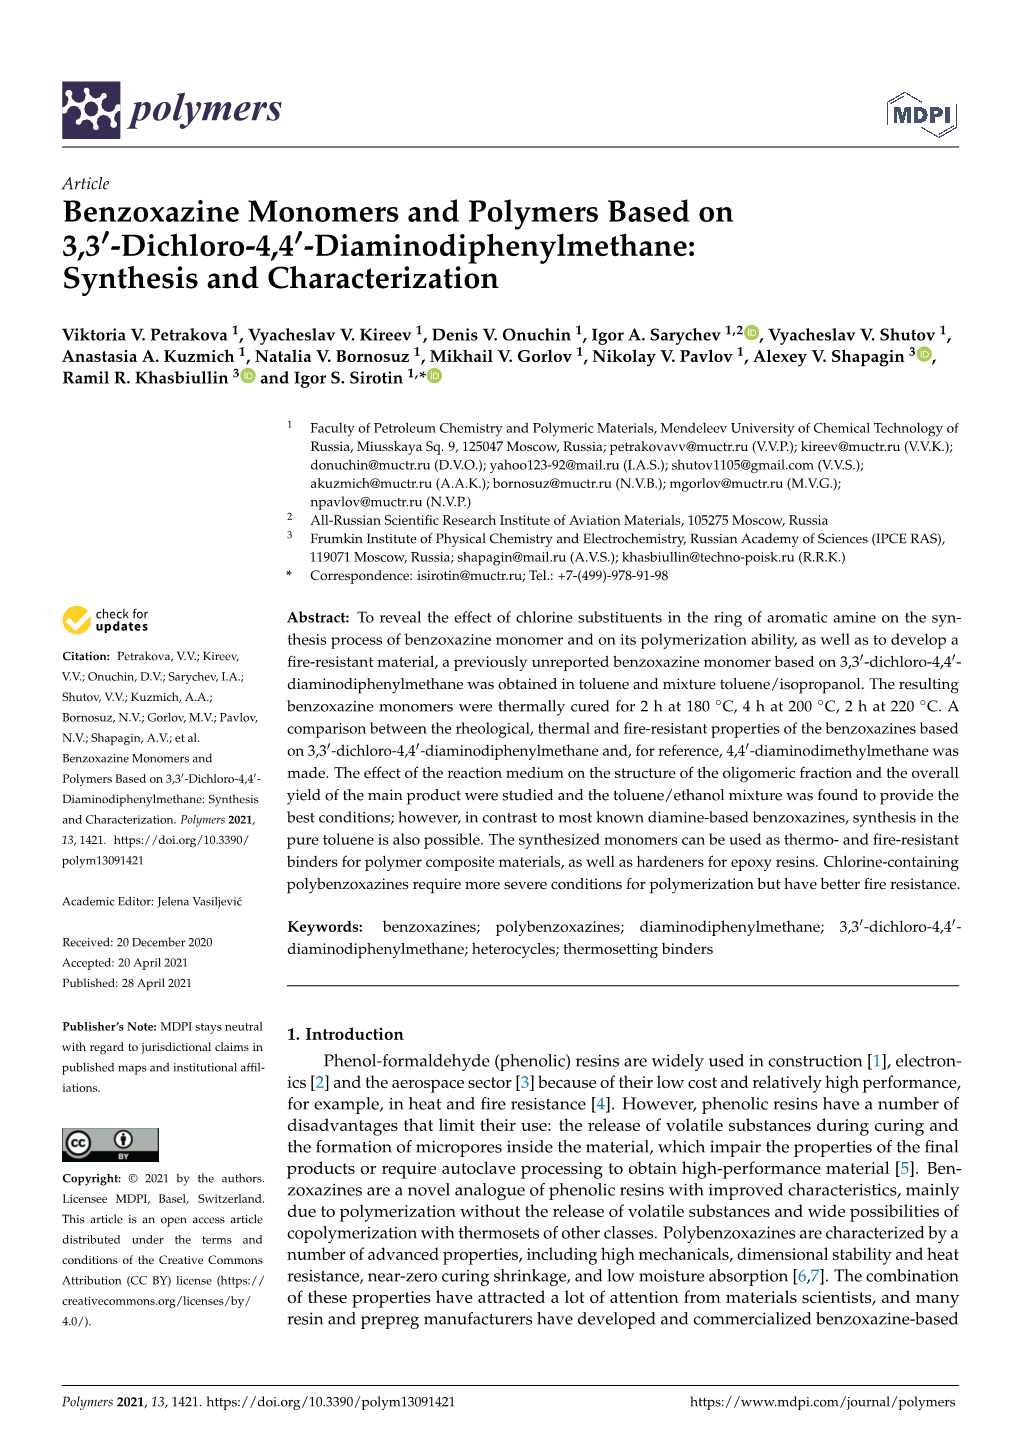 Benzoxazine Monomers and Polymers Based on 3,30-Dichloro-4,40-Diaminodiphenylmethane: Synthesis and Characterization